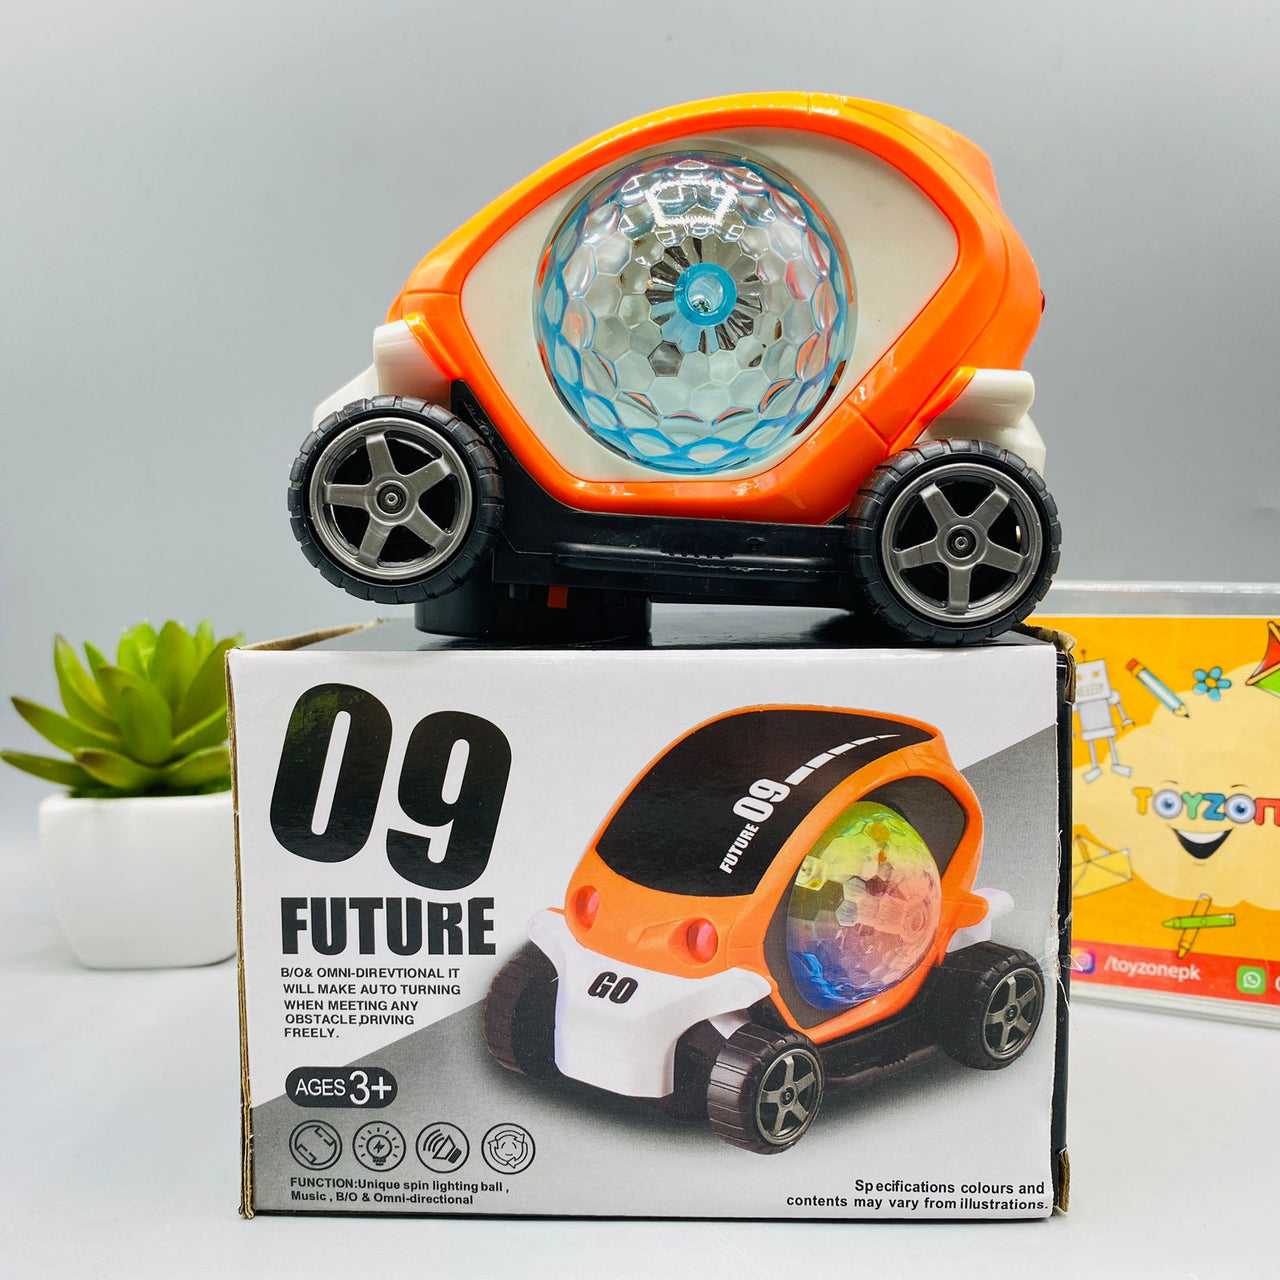 09 future car rotate 360 with flashing light music